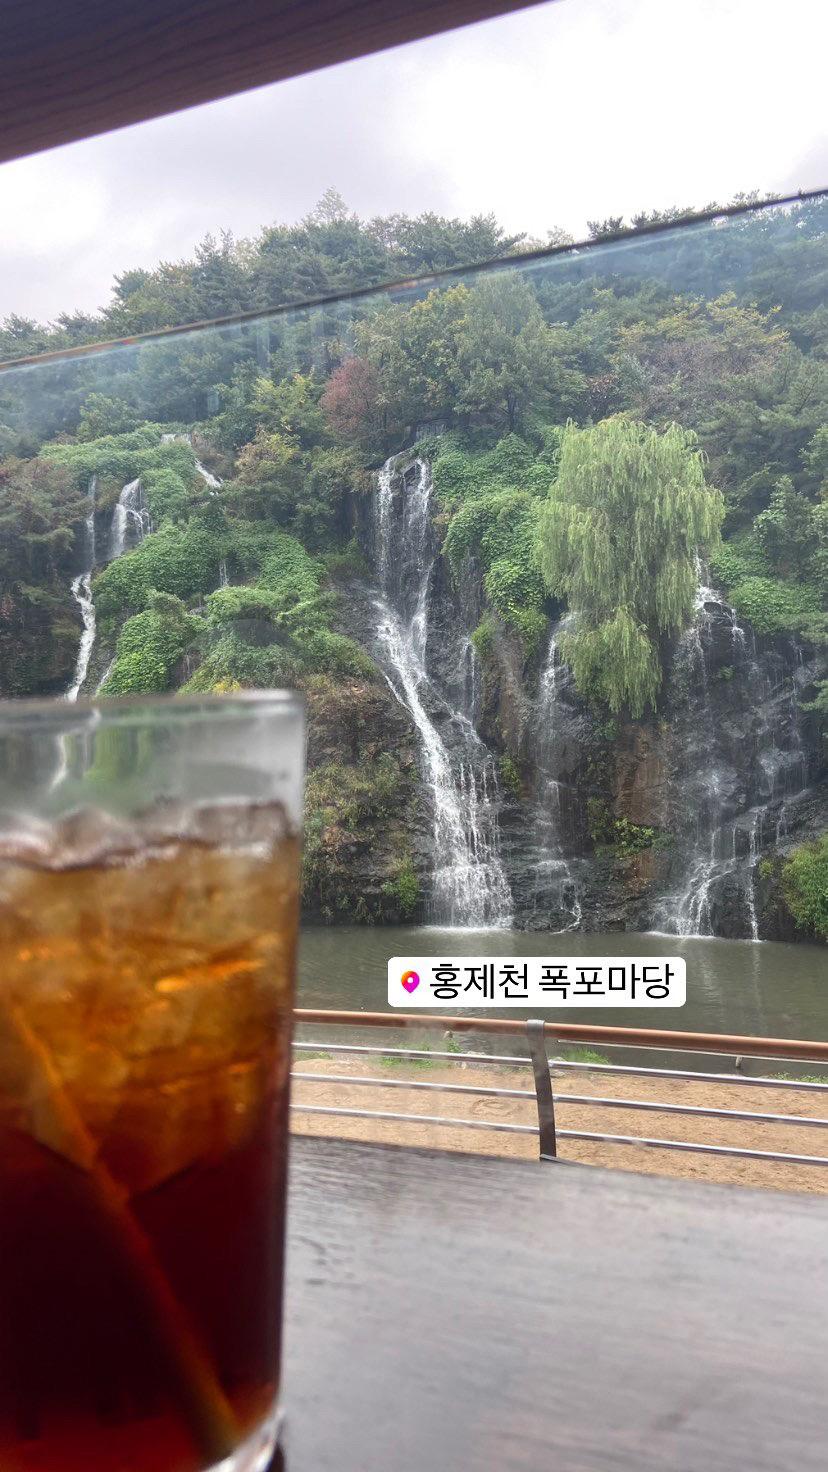 Cafe Pokpo (카페 폭포) : El famoso café cascada en Seúl